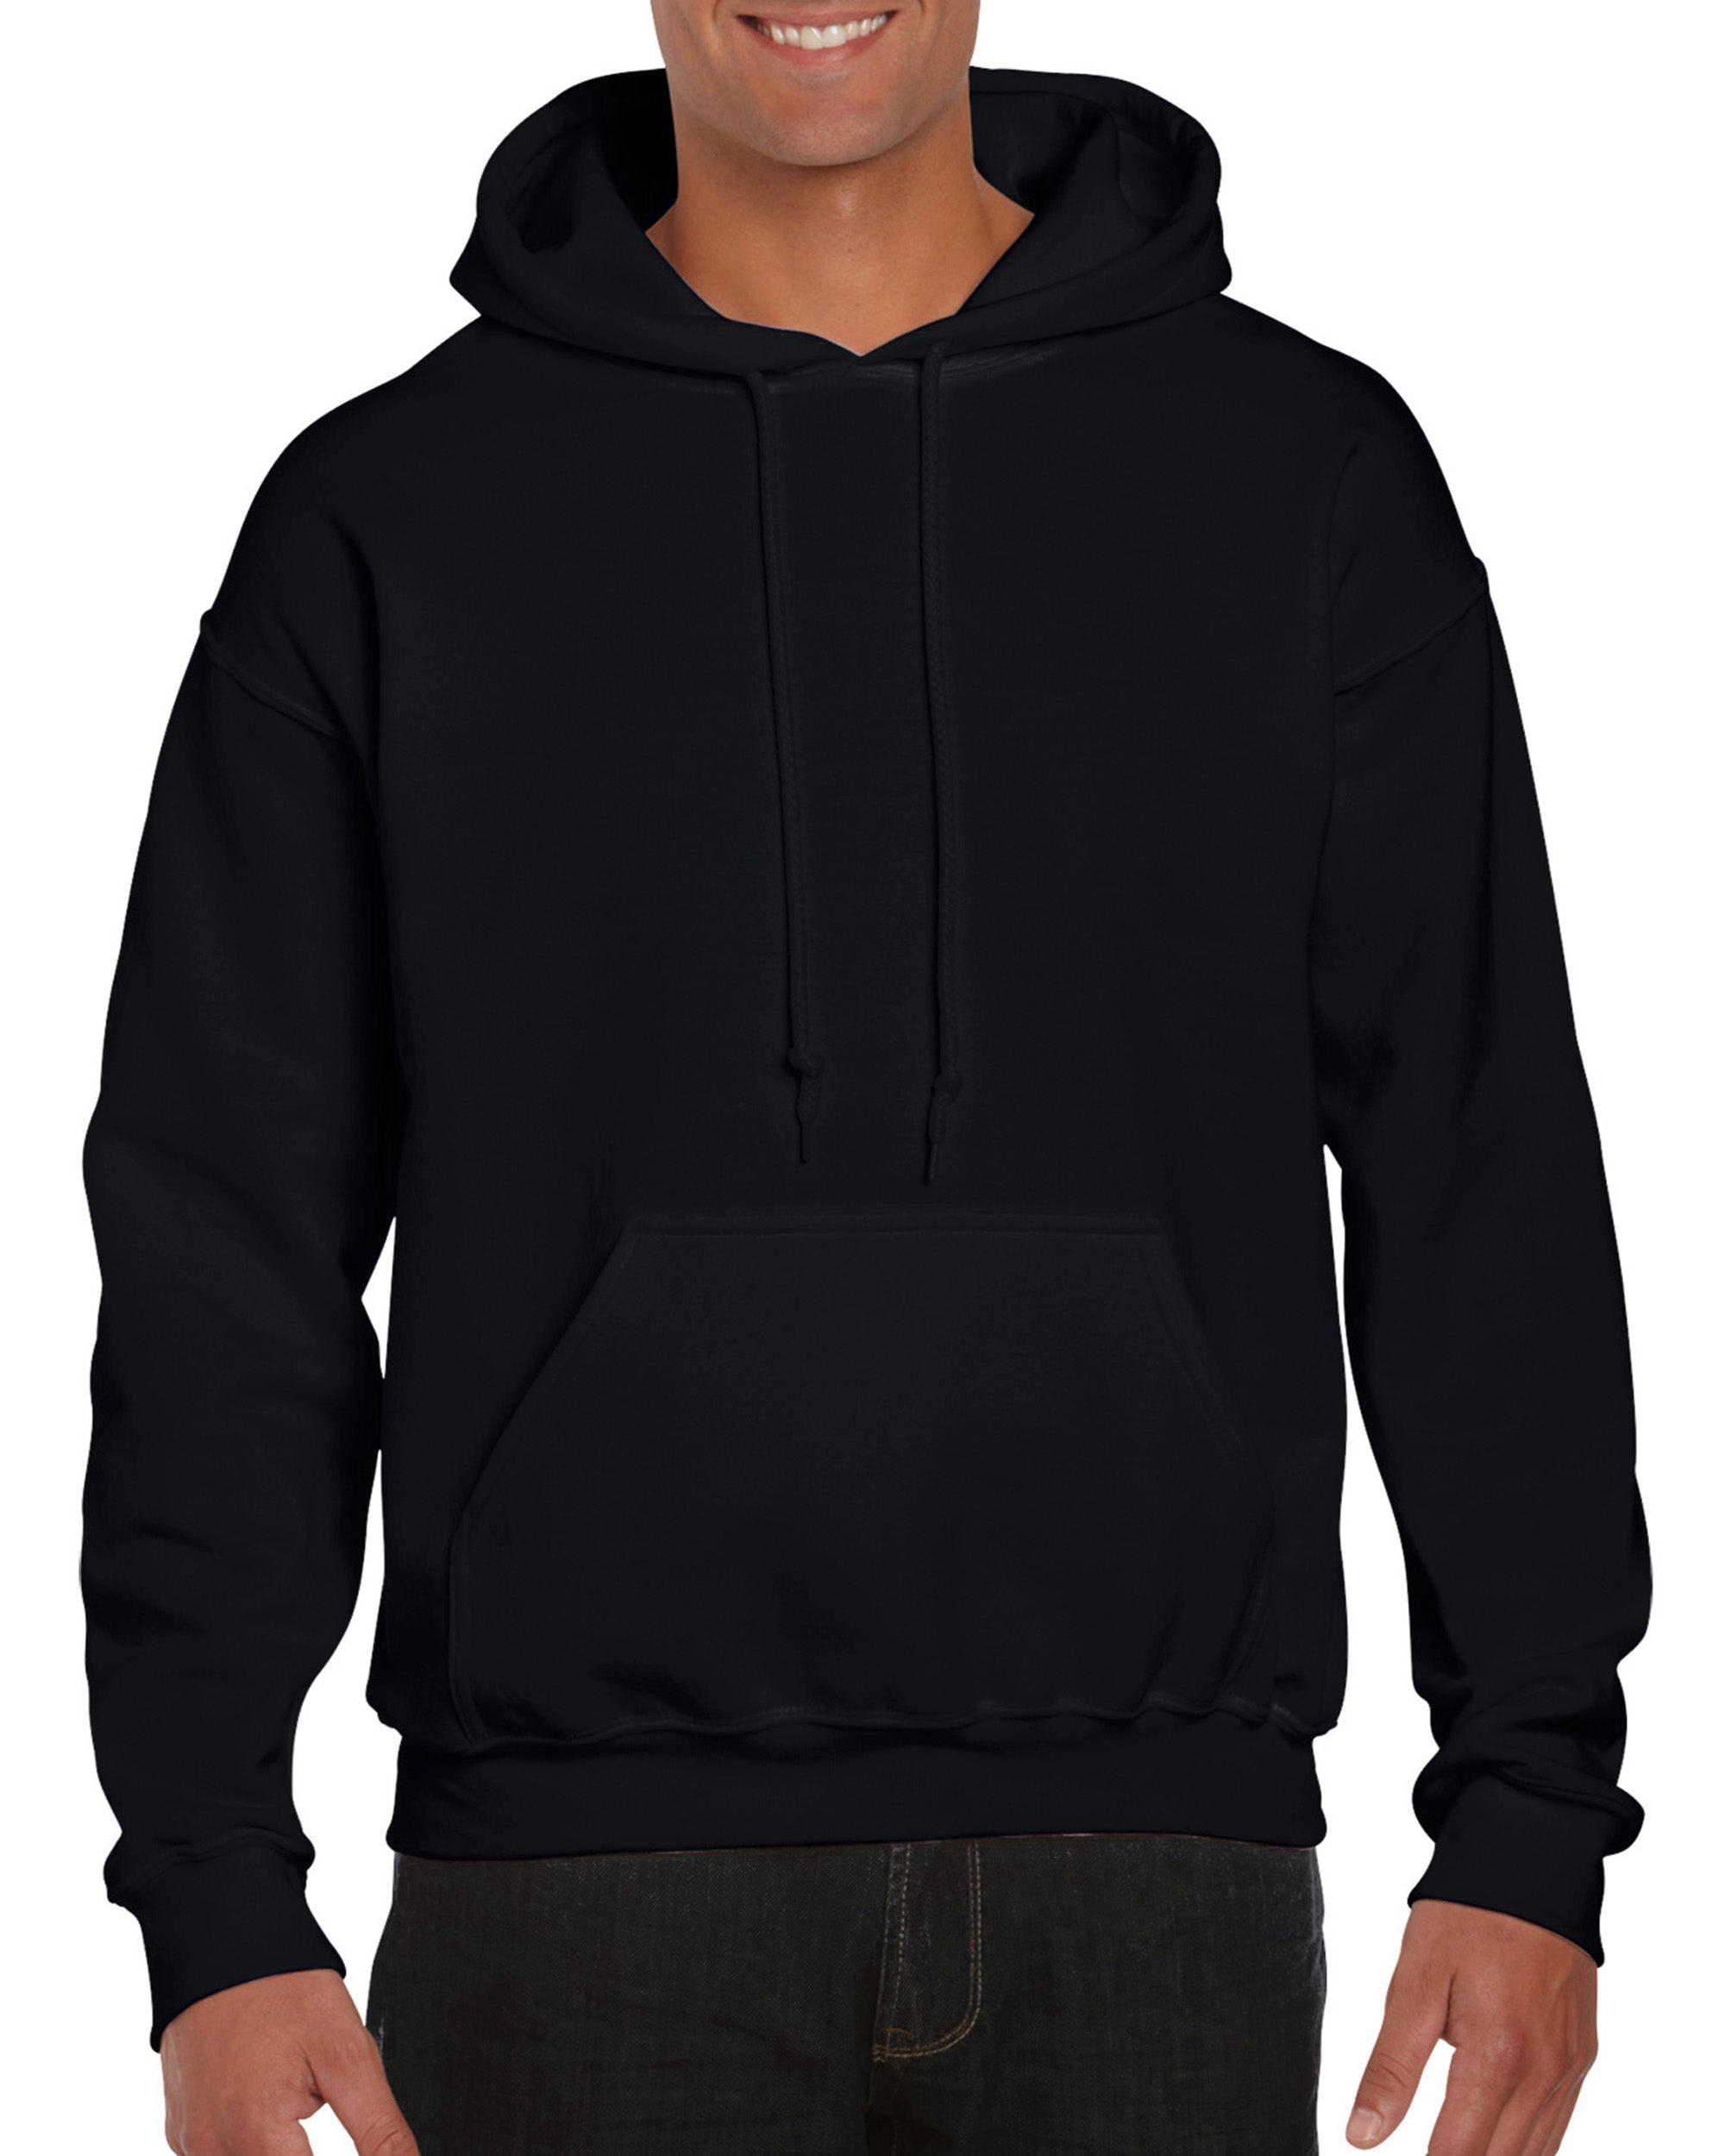 DryBlend Adult Hooded Sweatshirt